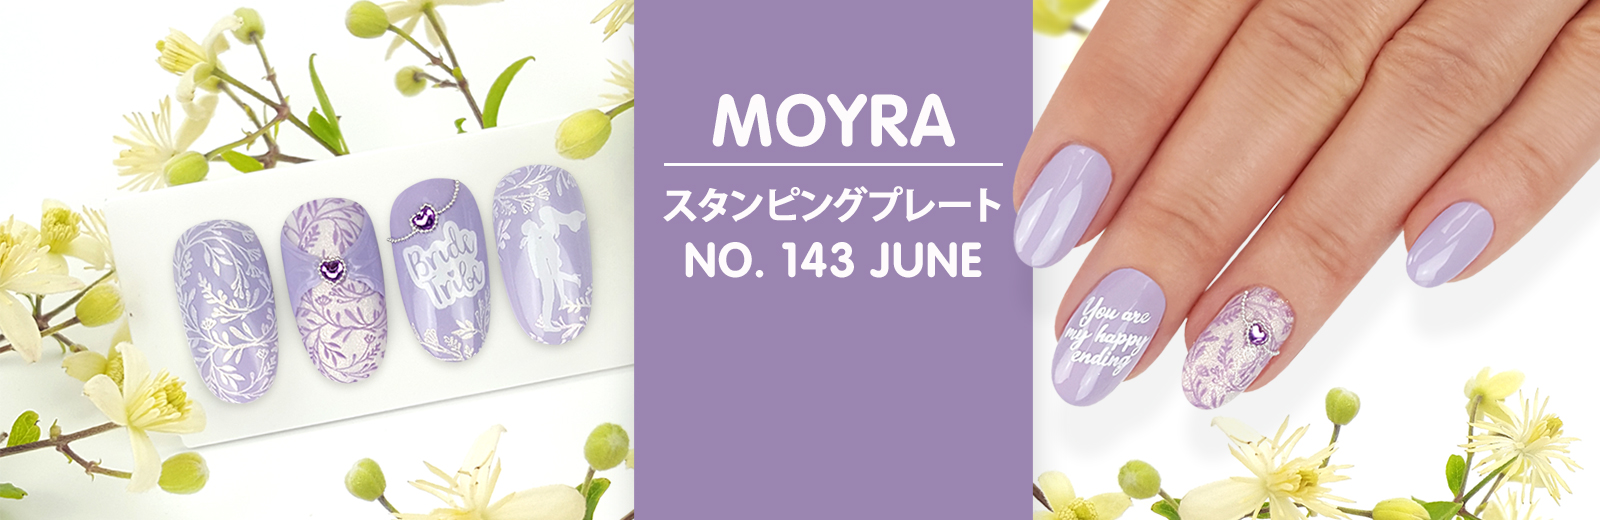 Moyra スタンピングプレート Stamping plate 143 June